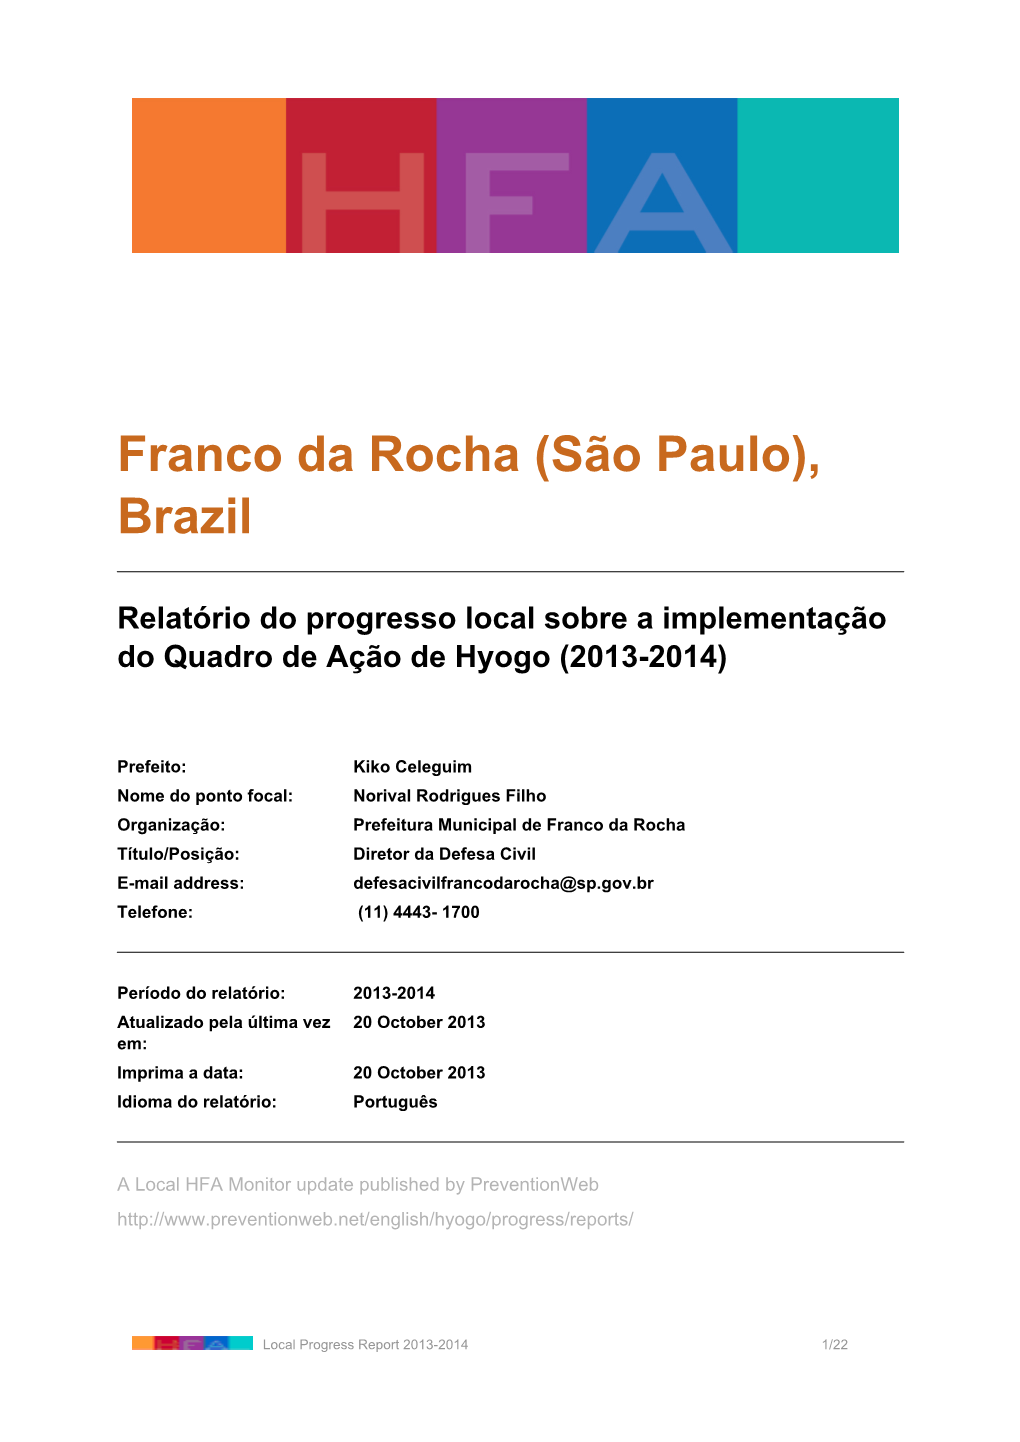 Franco Da Rocha (São Paulo), Brazil